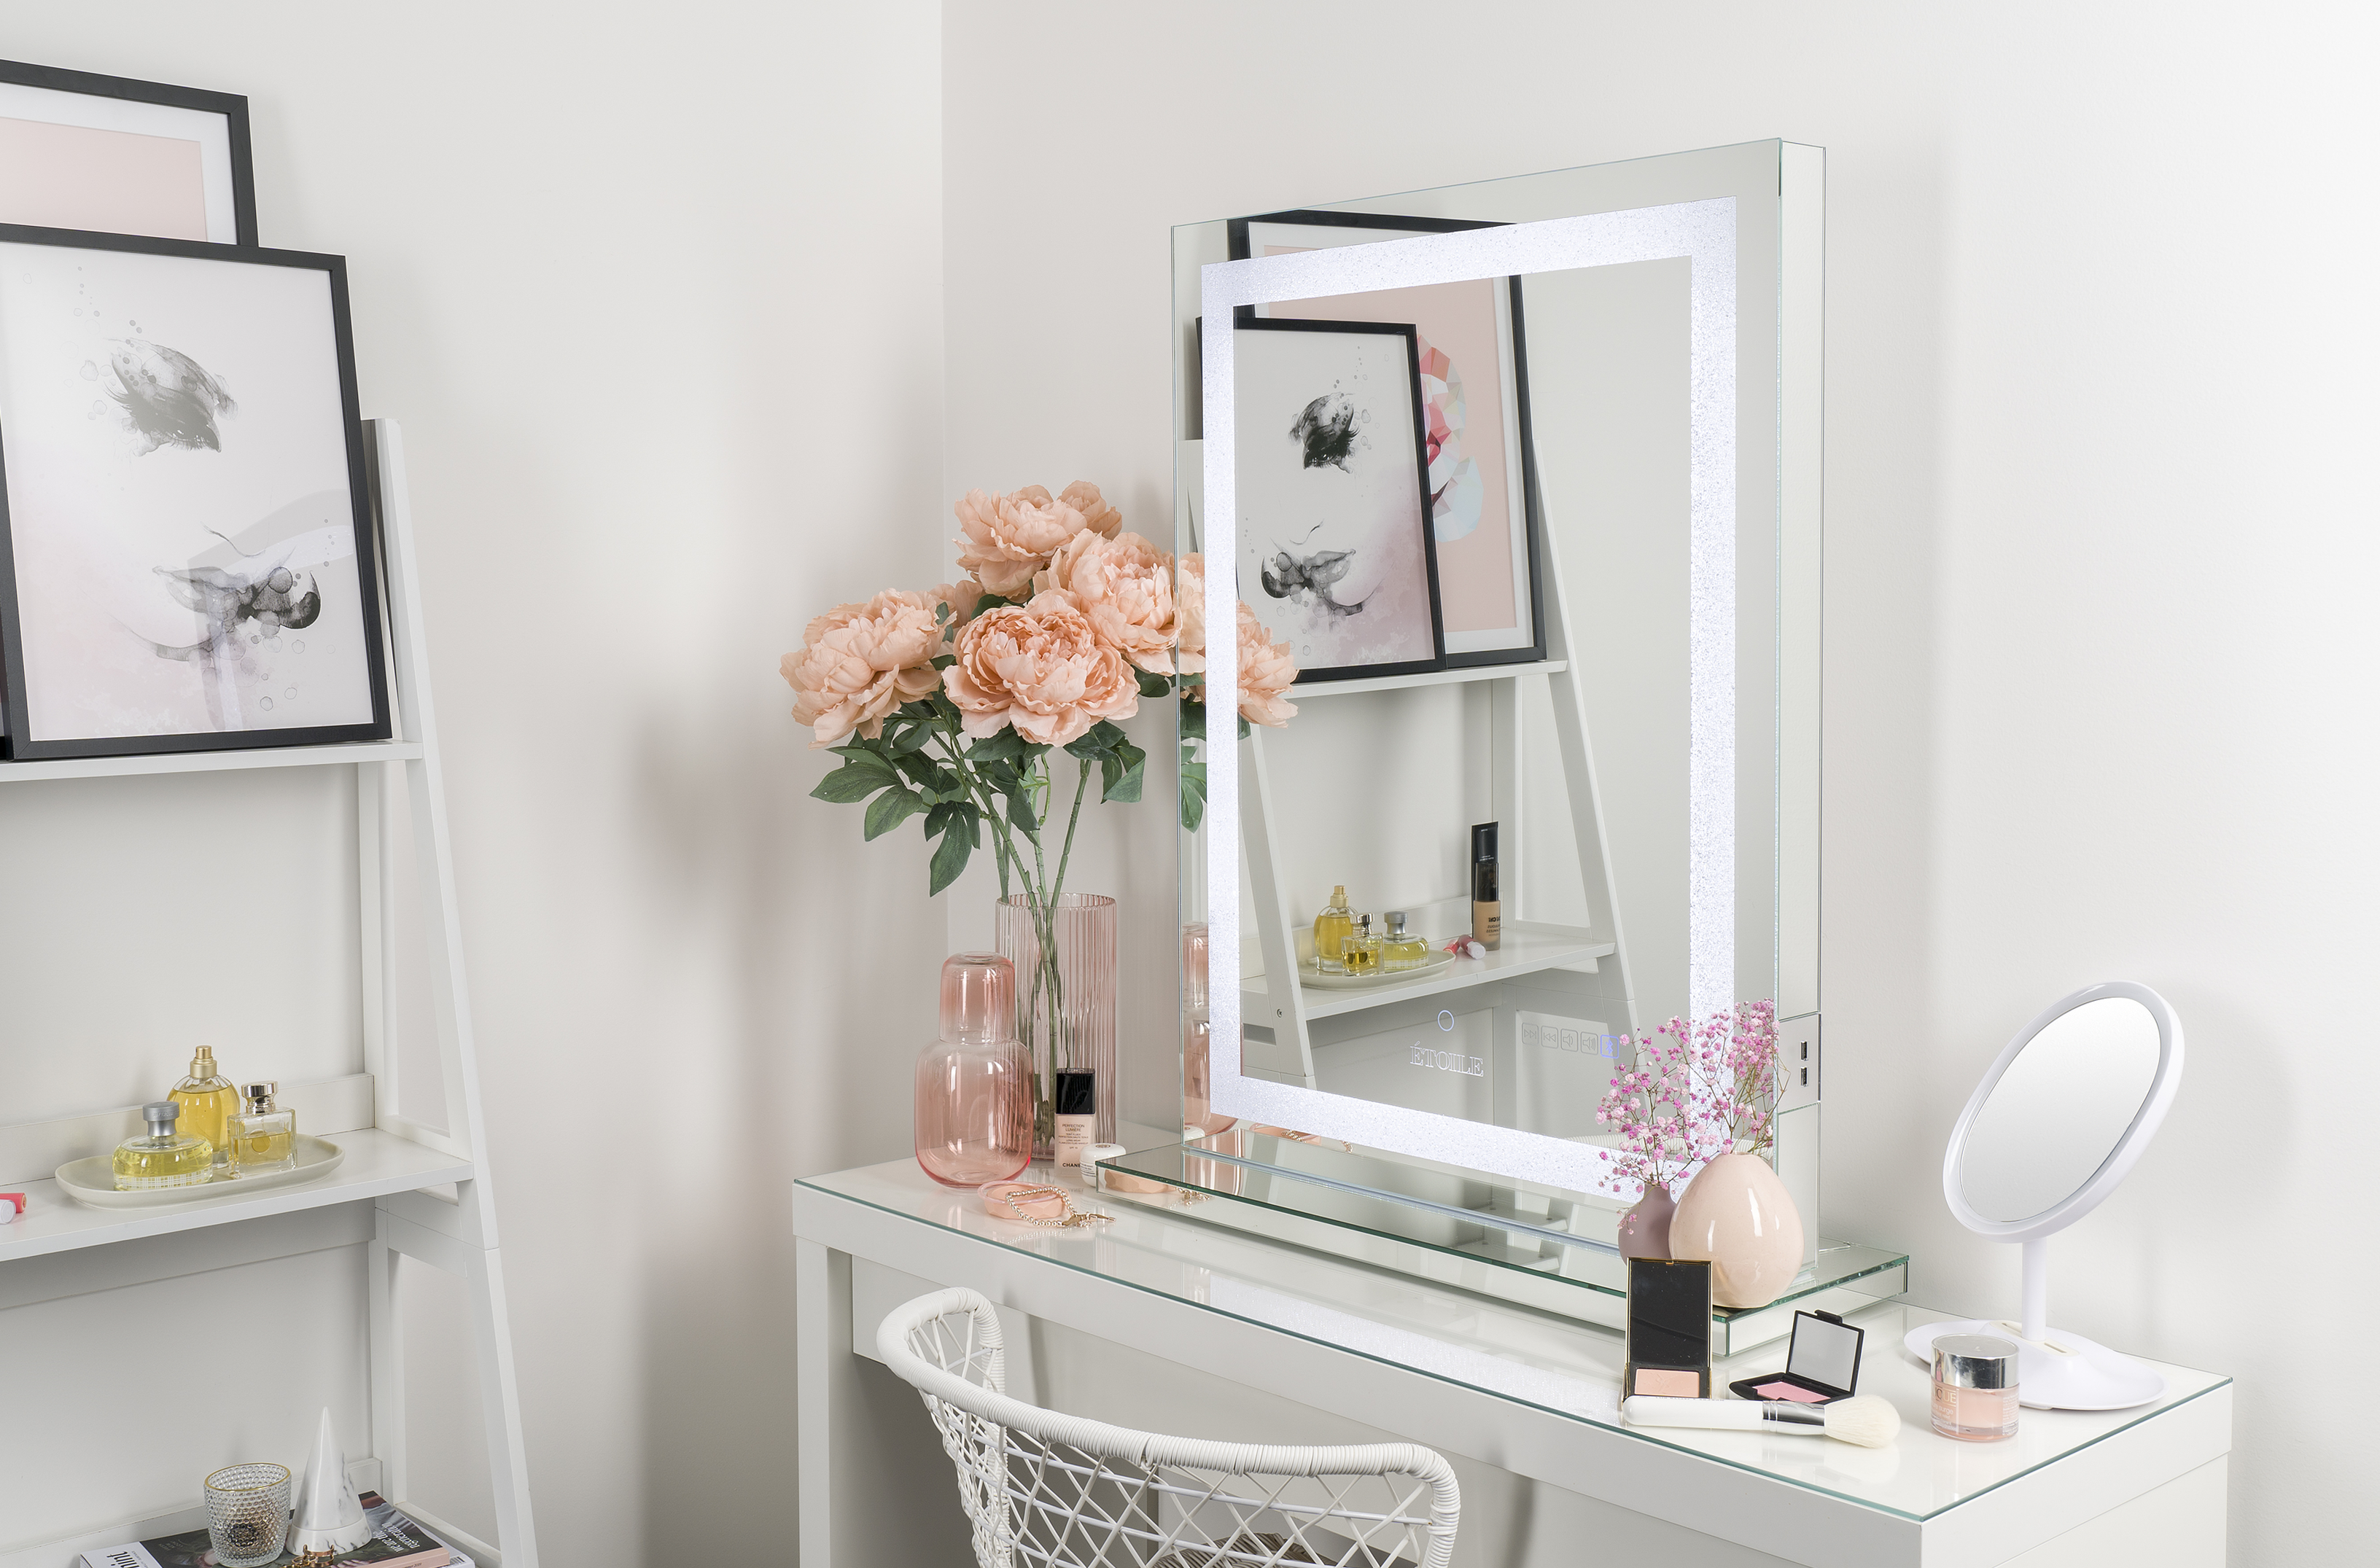 Set up Your Dream Vanity Room in 5 Steps